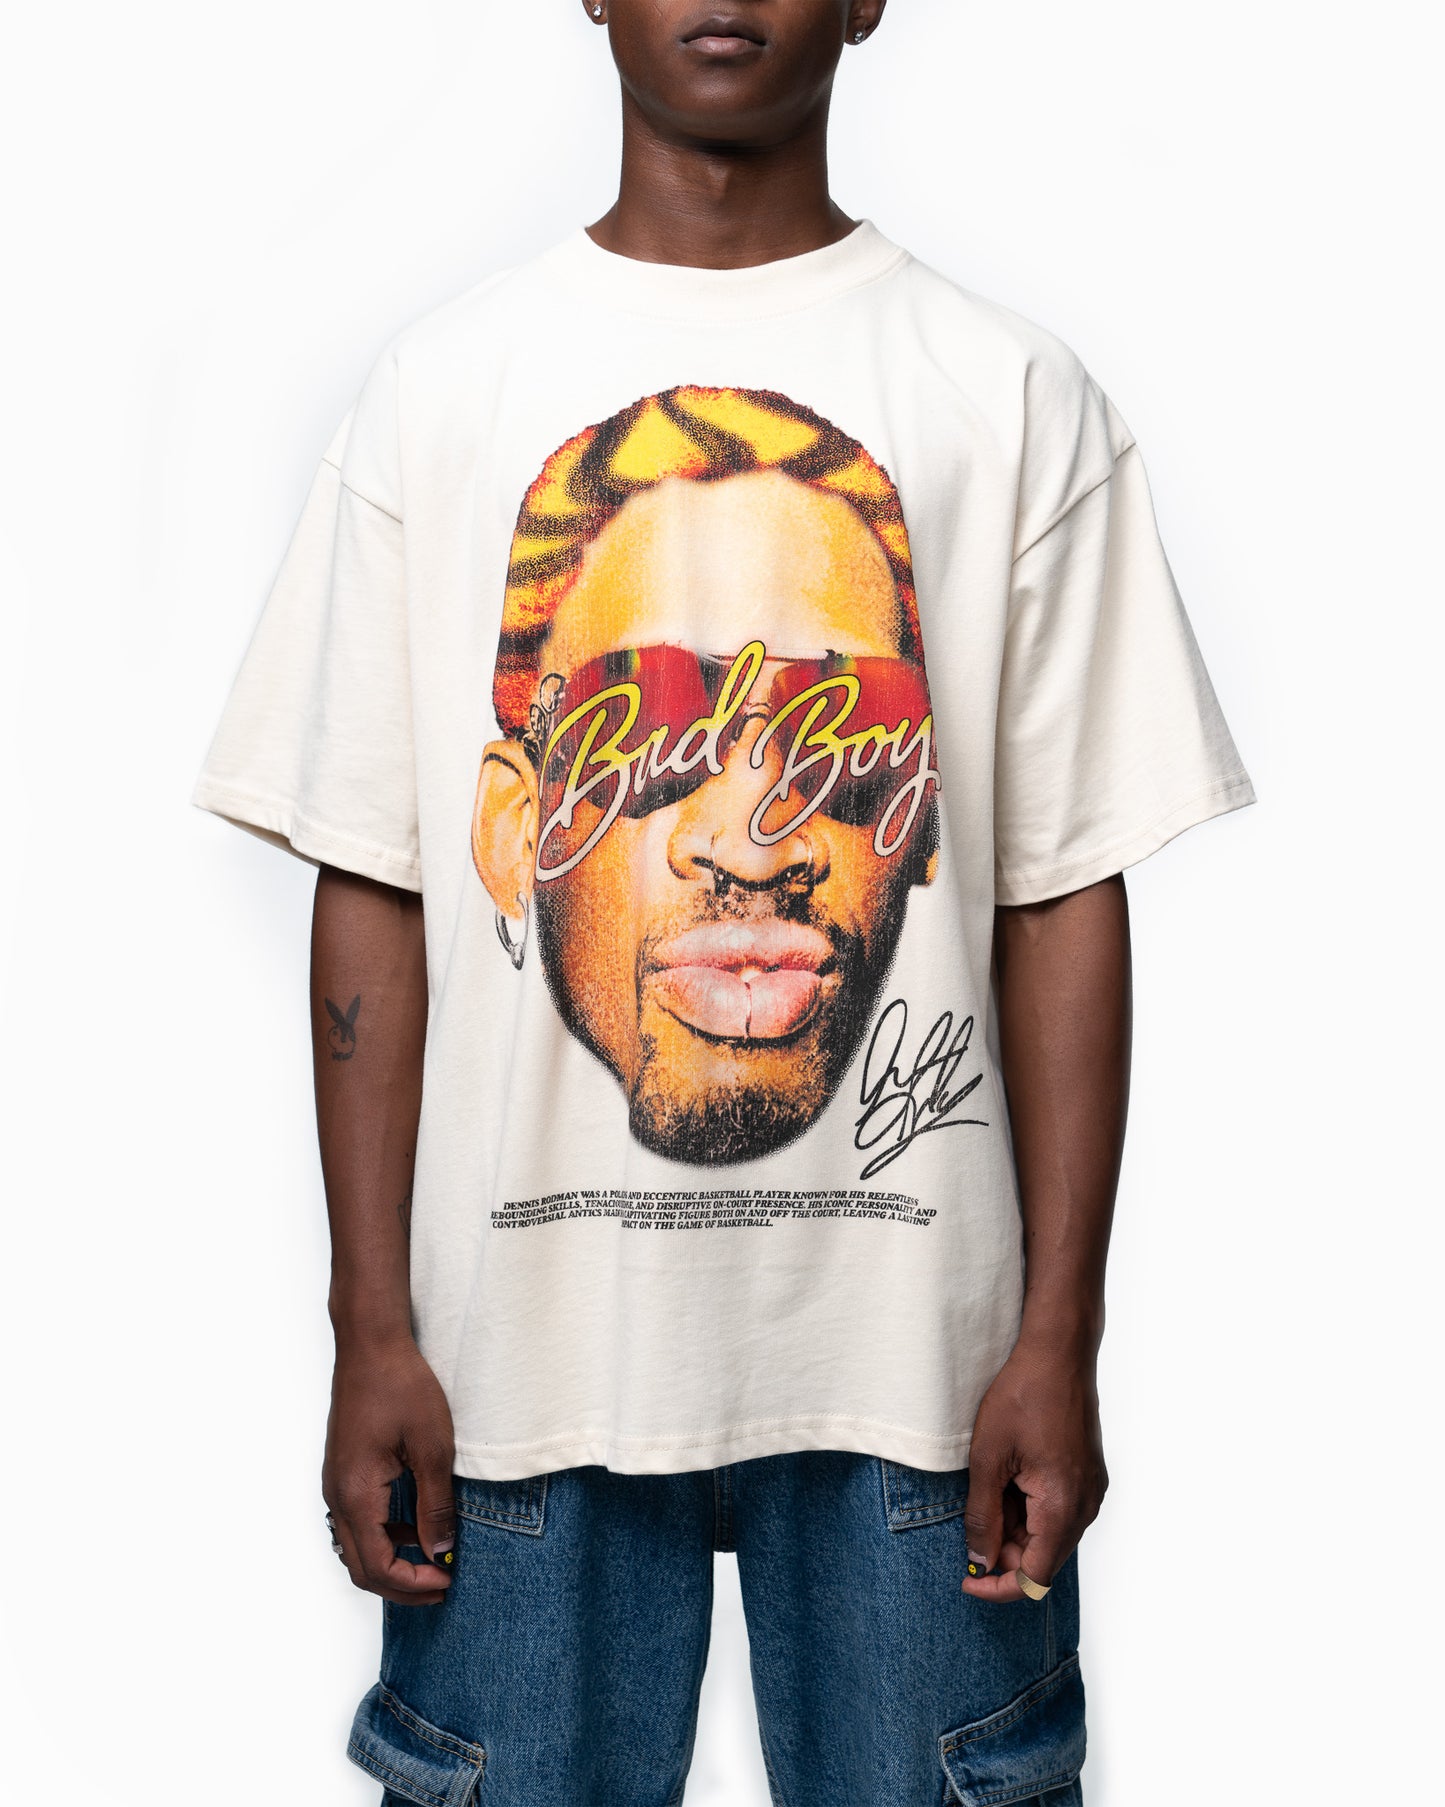 Biggie Smalls Jersey 10 Bad Boy Shirt 90s Hip Hop Clothing